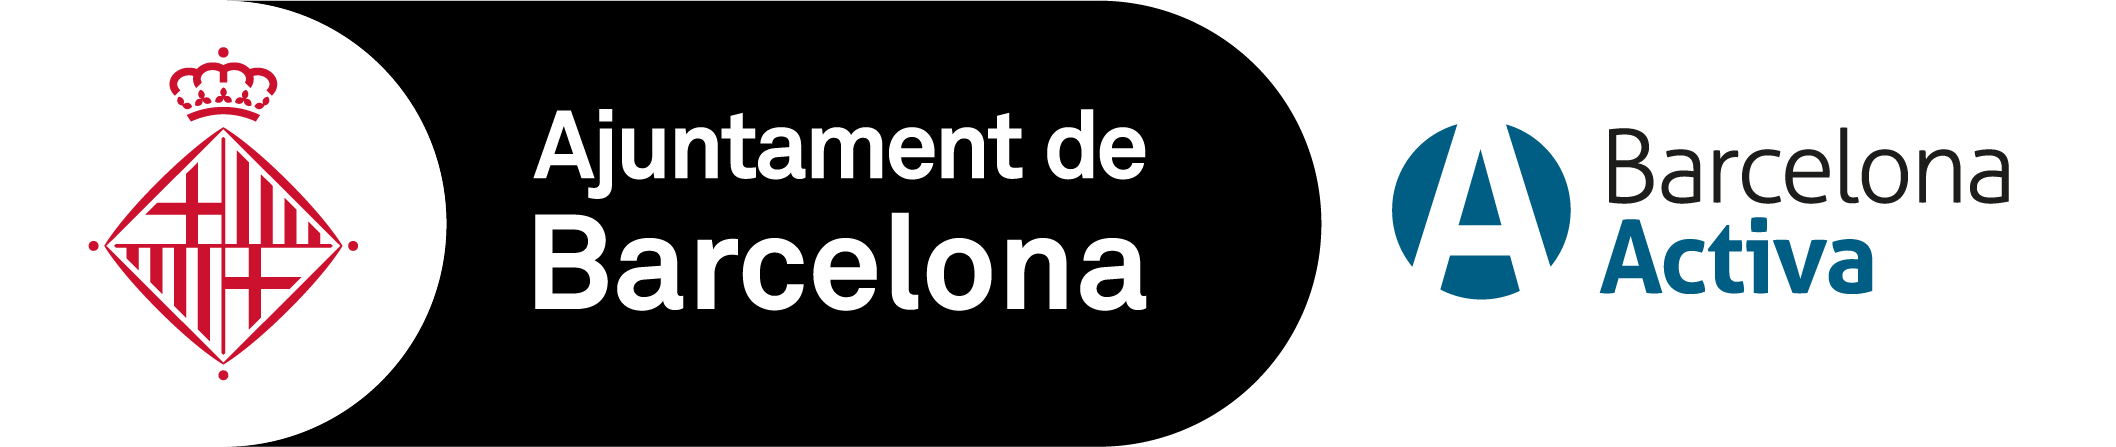 Barcelona Activa i Ajuntament